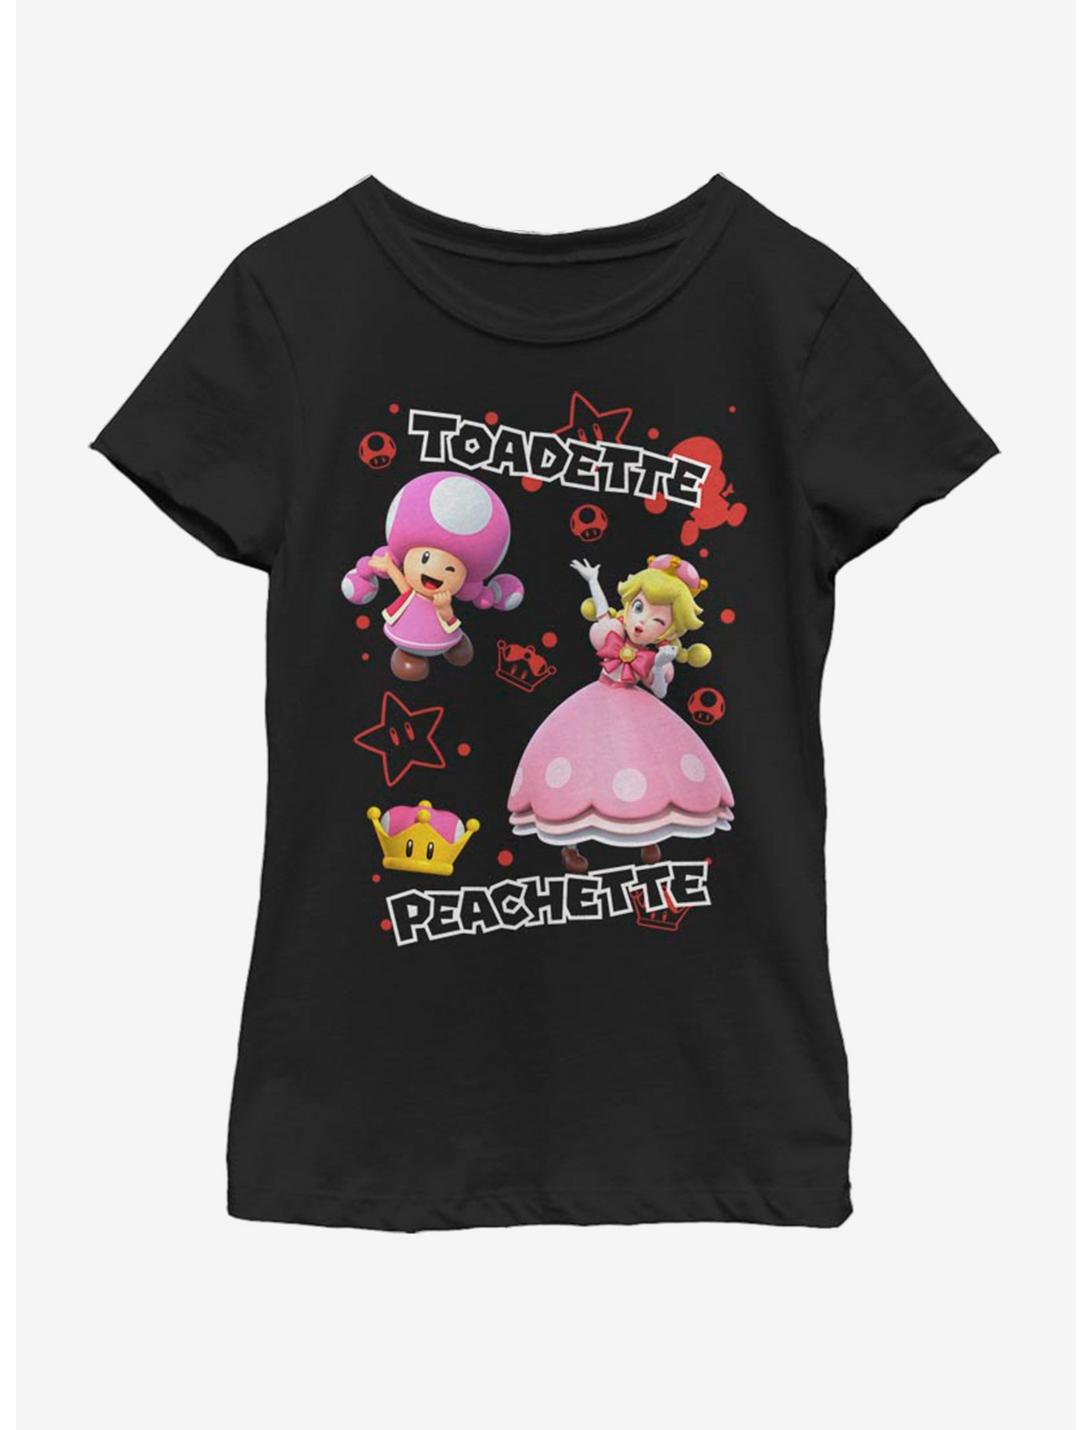 Nintendo Toadette and Peachette Youth Girls T-Shirt, BLACK, hi-res